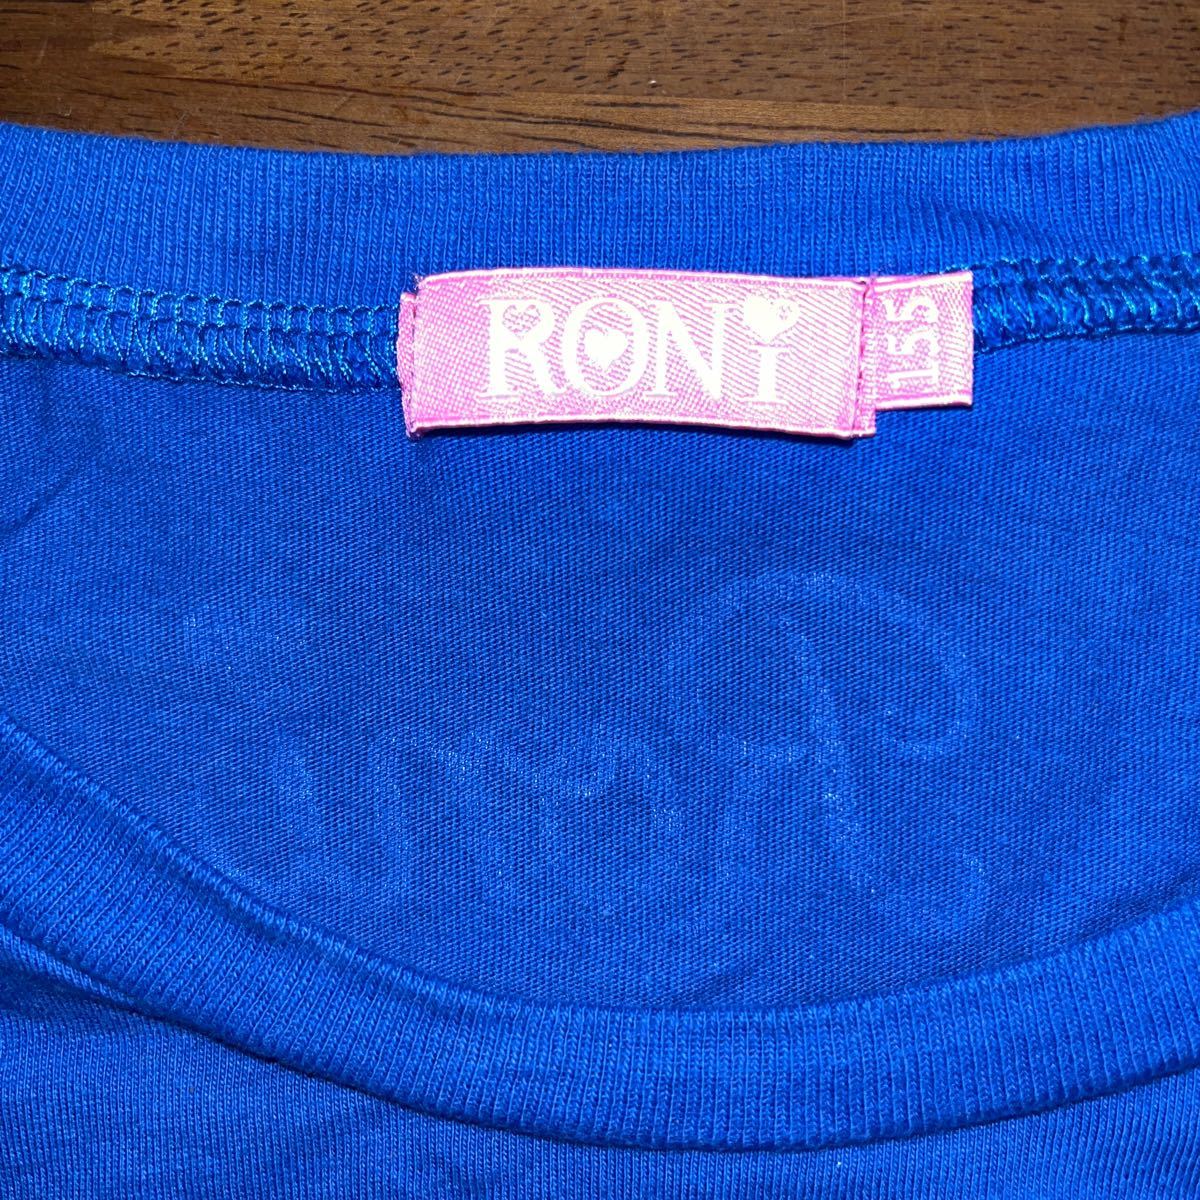 [RONI|roni.] футболка мини-юбка chu-ru юбка размер L 150.155cm б/у верх и низ 2 шт. комплект синий 